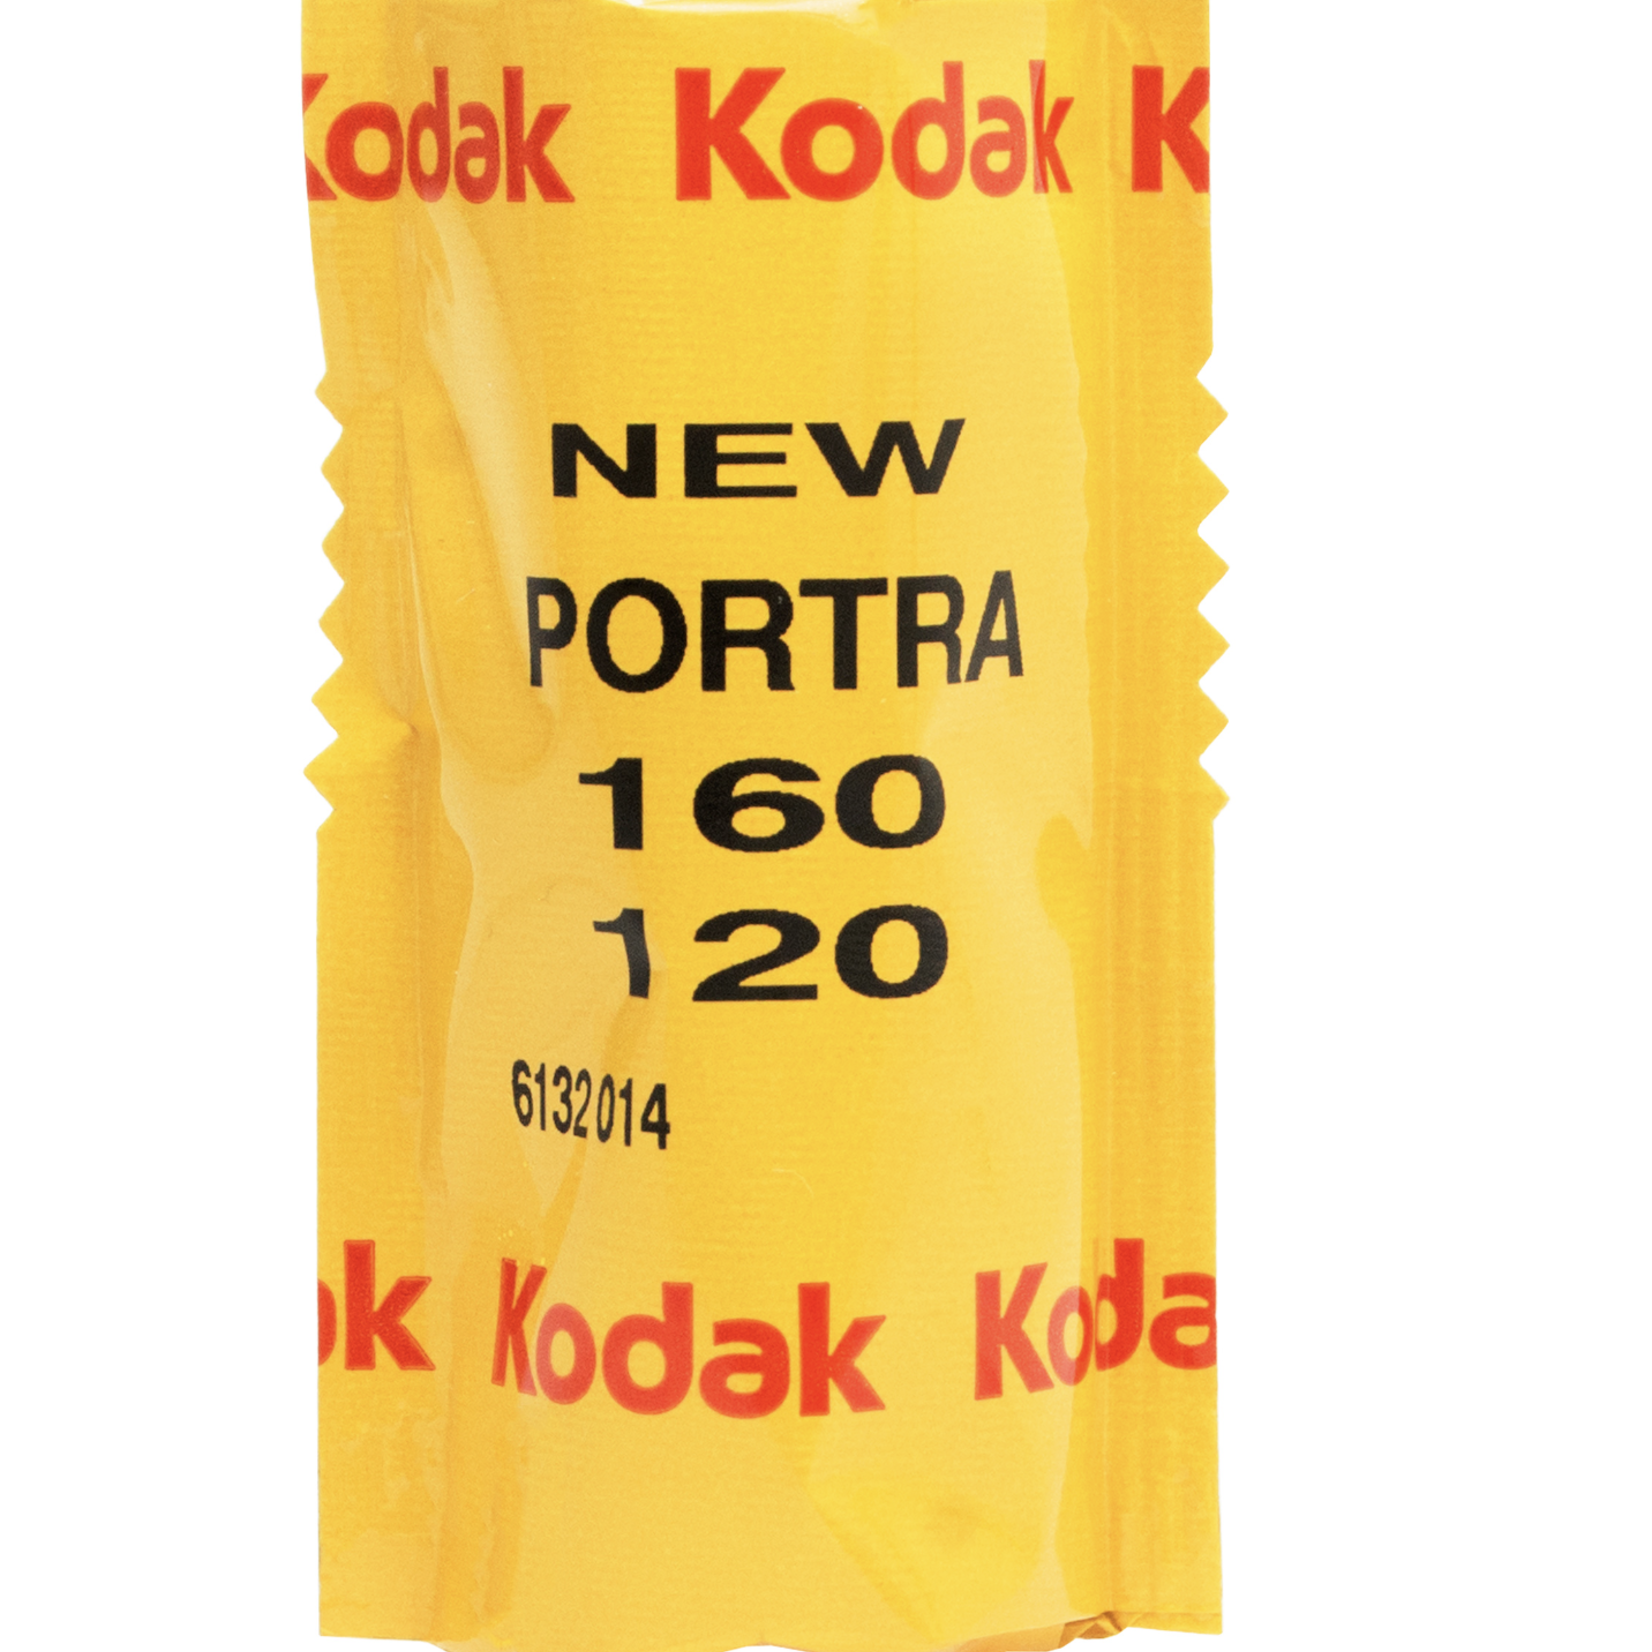 Kodak Kodak Professional Portra 160 Color Negative Film 120 Roll Film